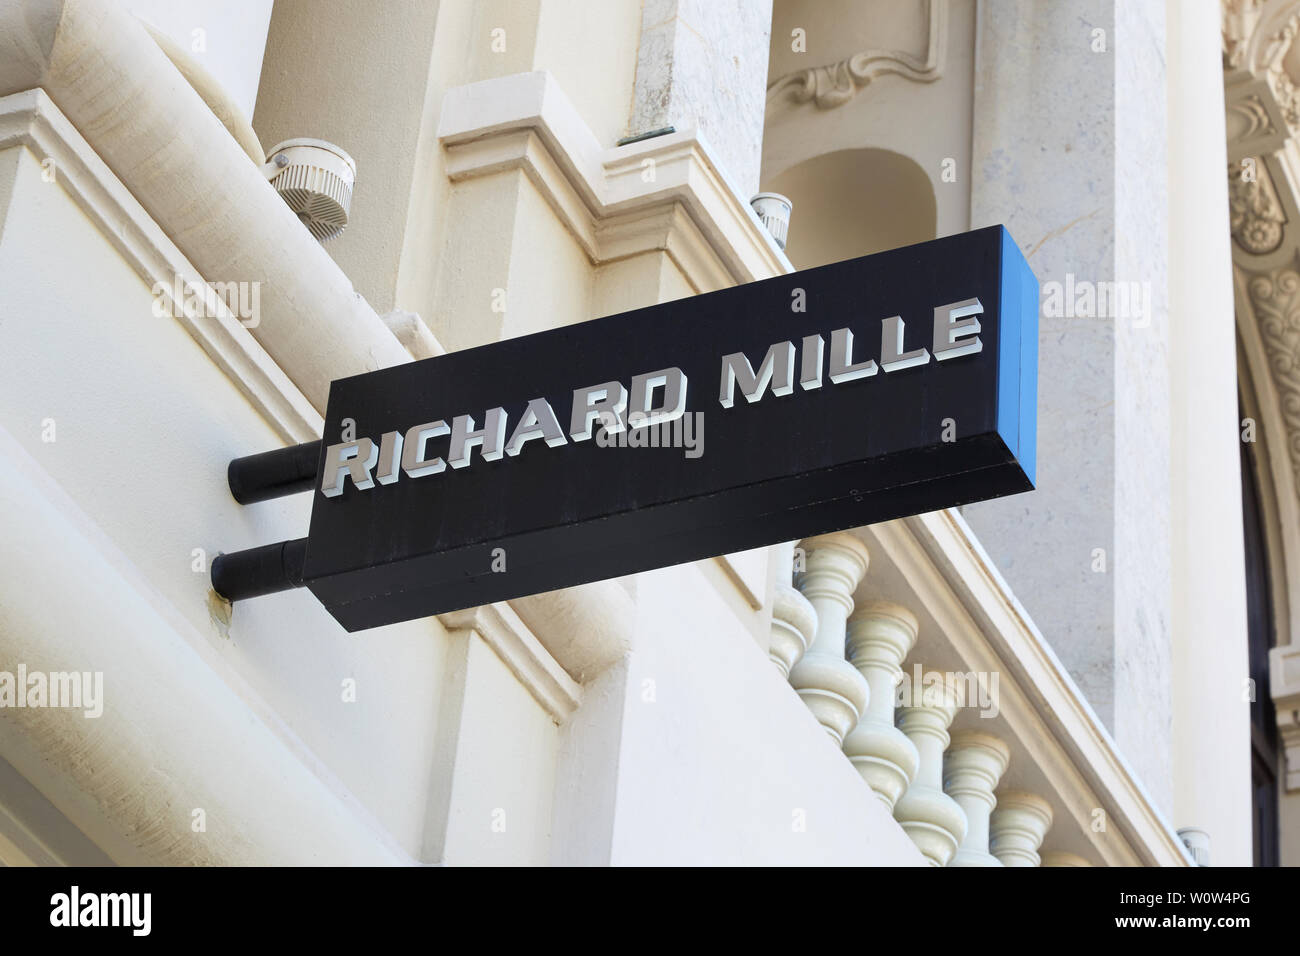 MONTE CARLO, MONACO - AUGUST 21, 2016: Richard Mille luxury watch store sign in Monte Carlo, Monaco. Stock Photo